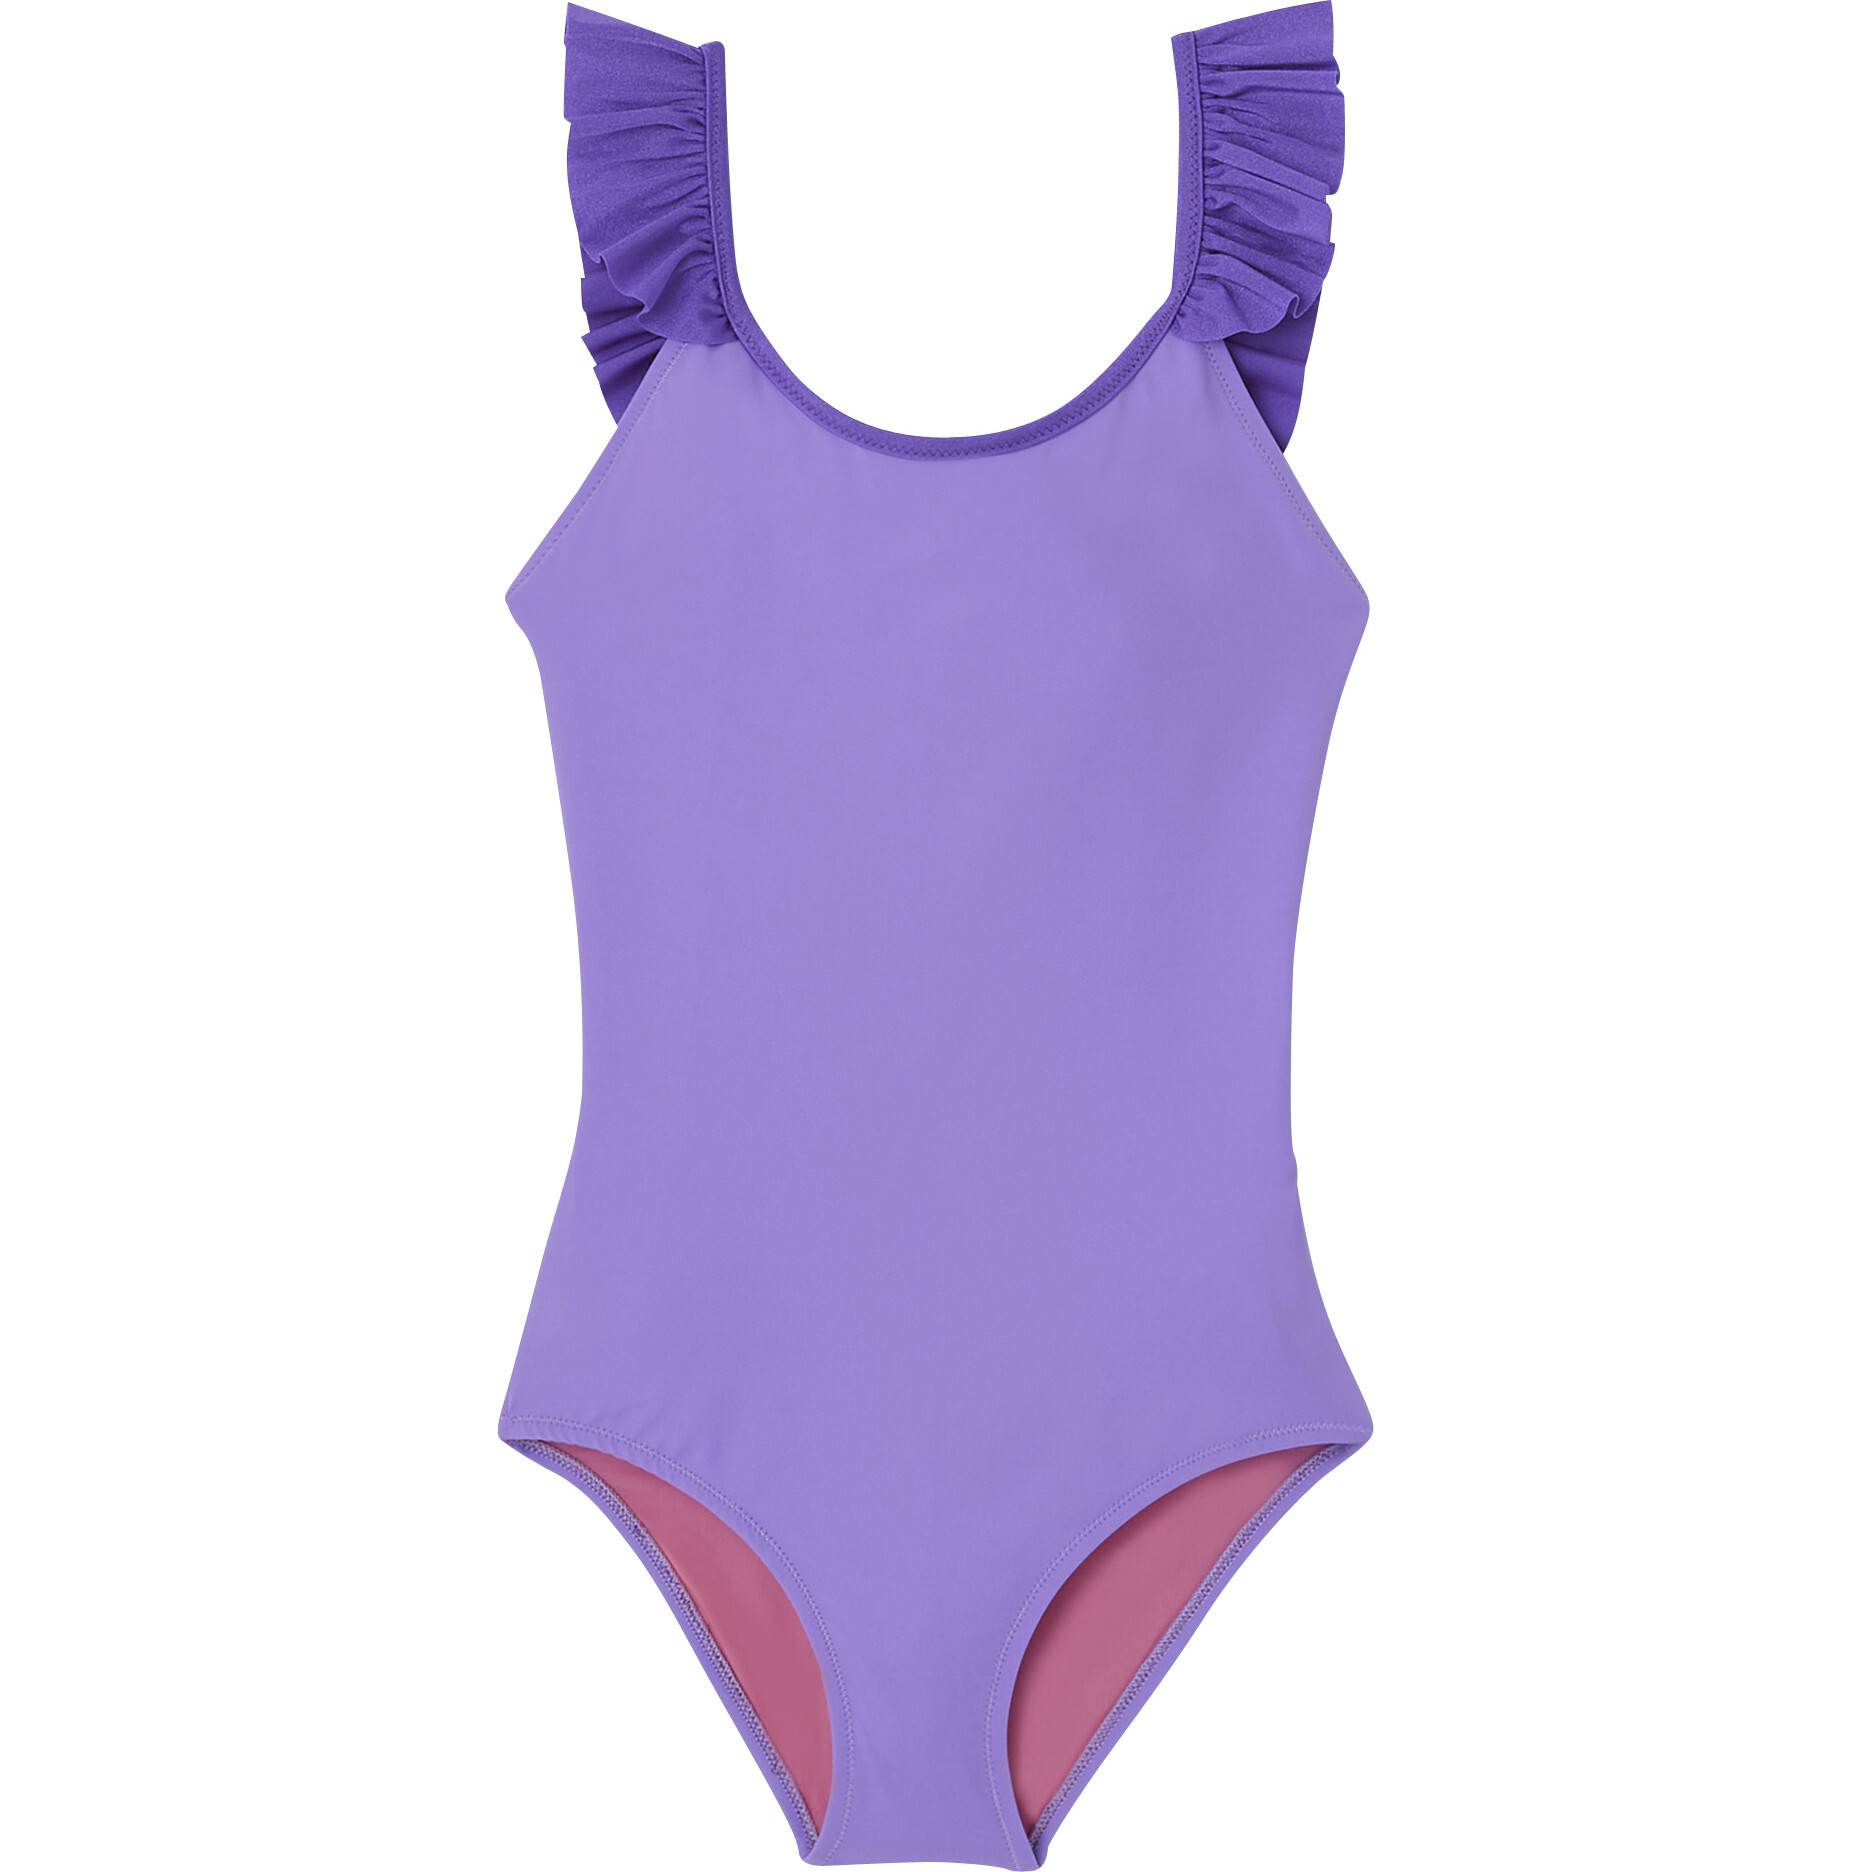 Violet One Piece Swimsuit, Violet Swimsuit Girls